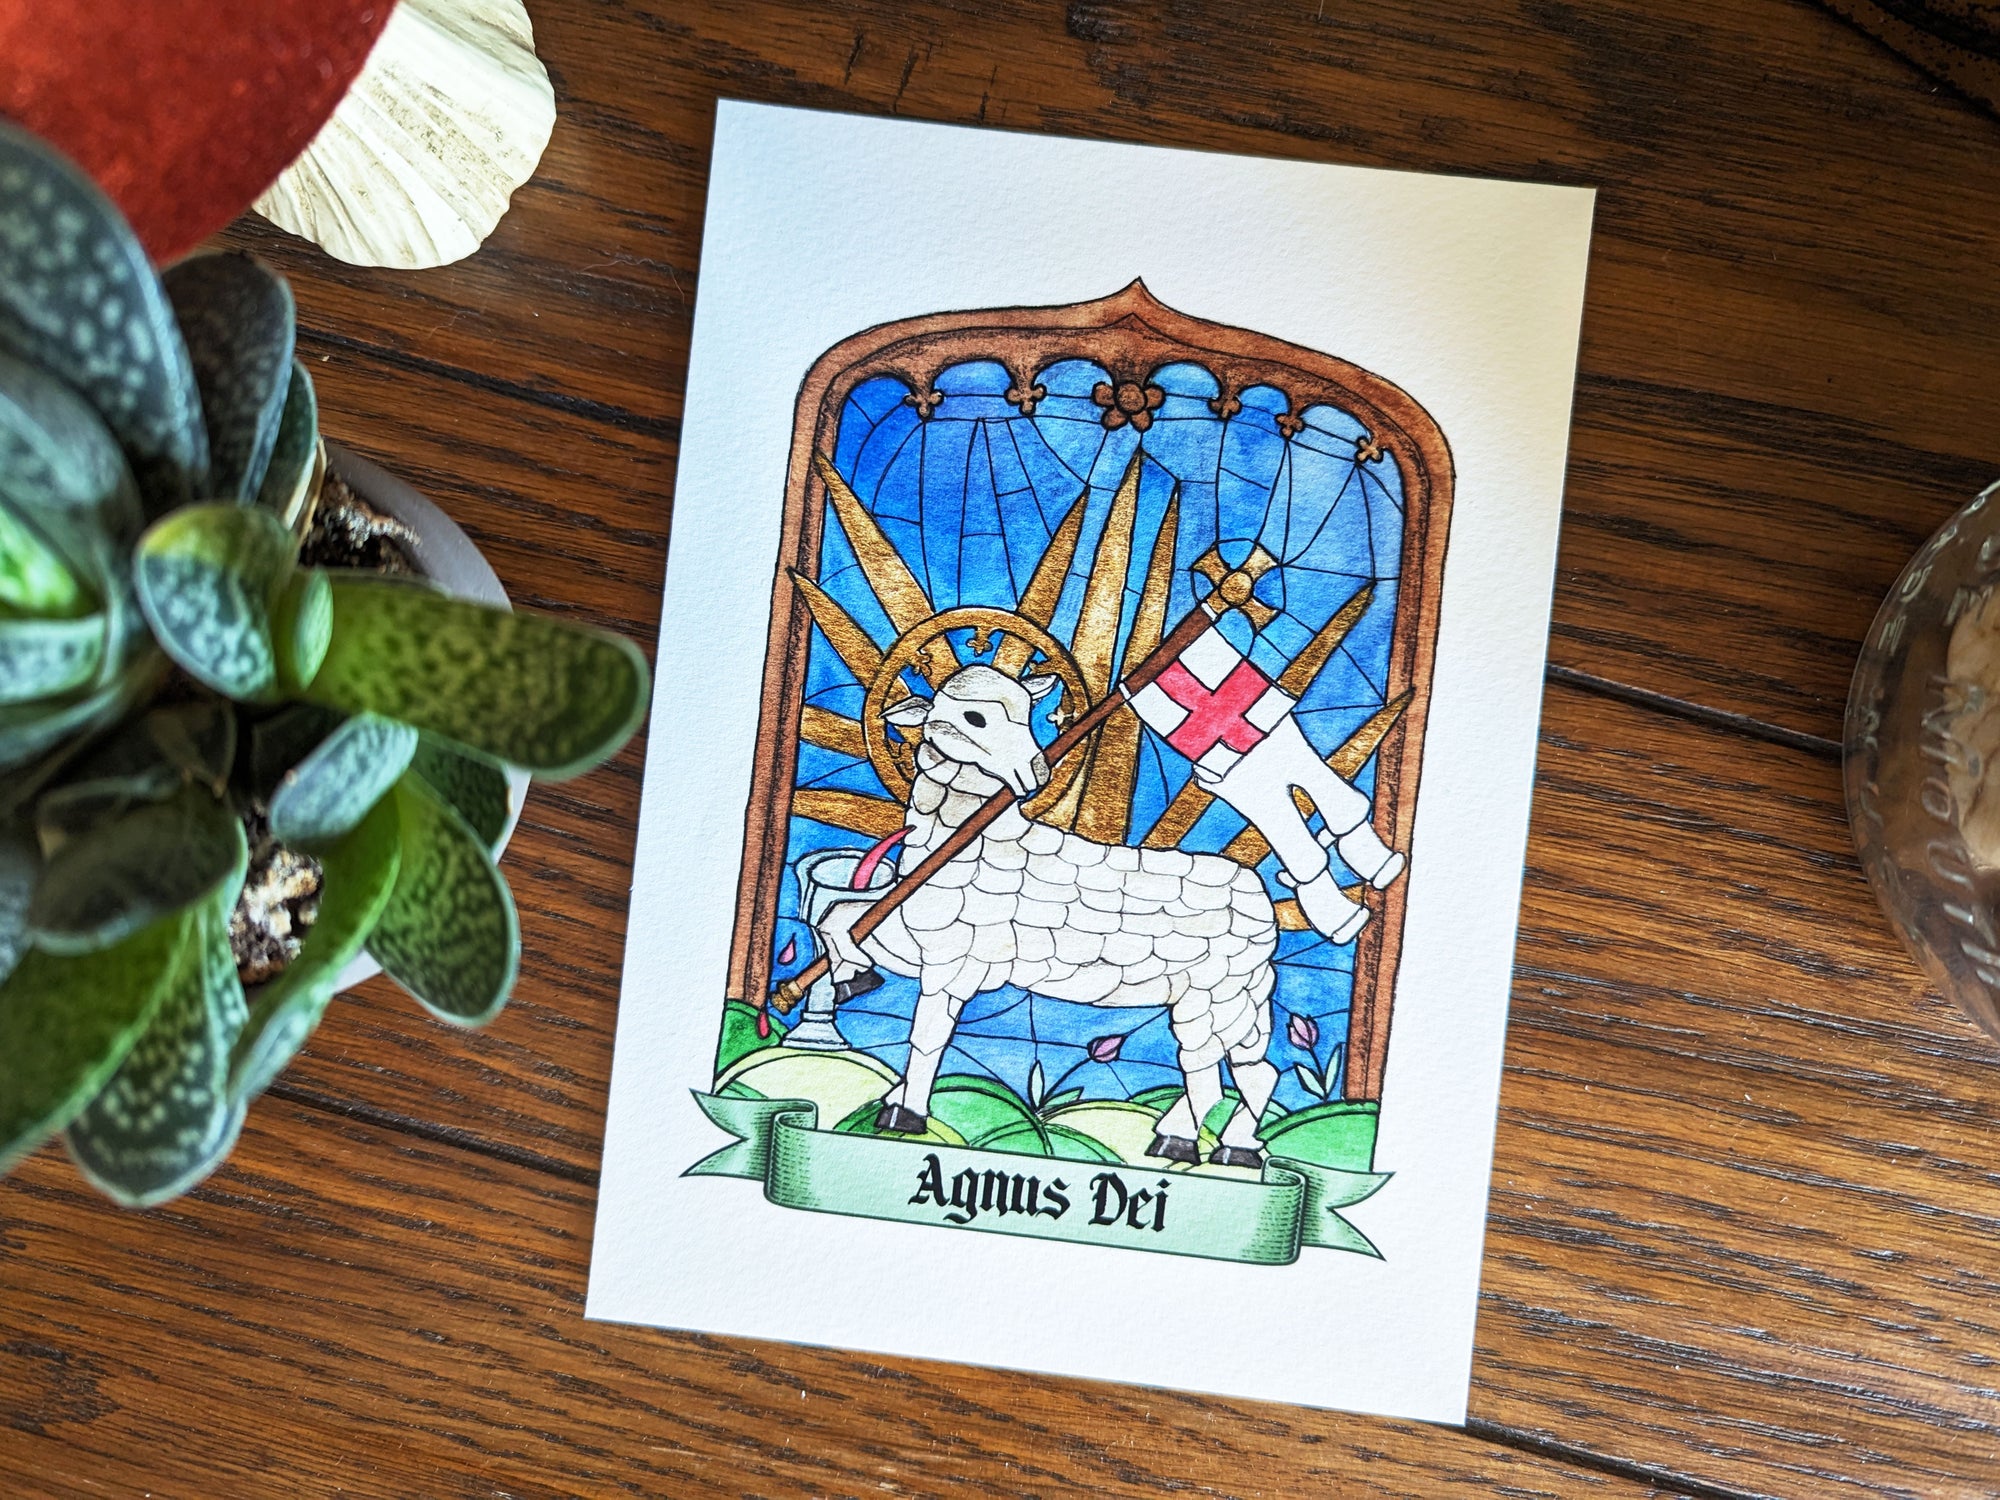 Agnus Dei ("Lamb of God") Print